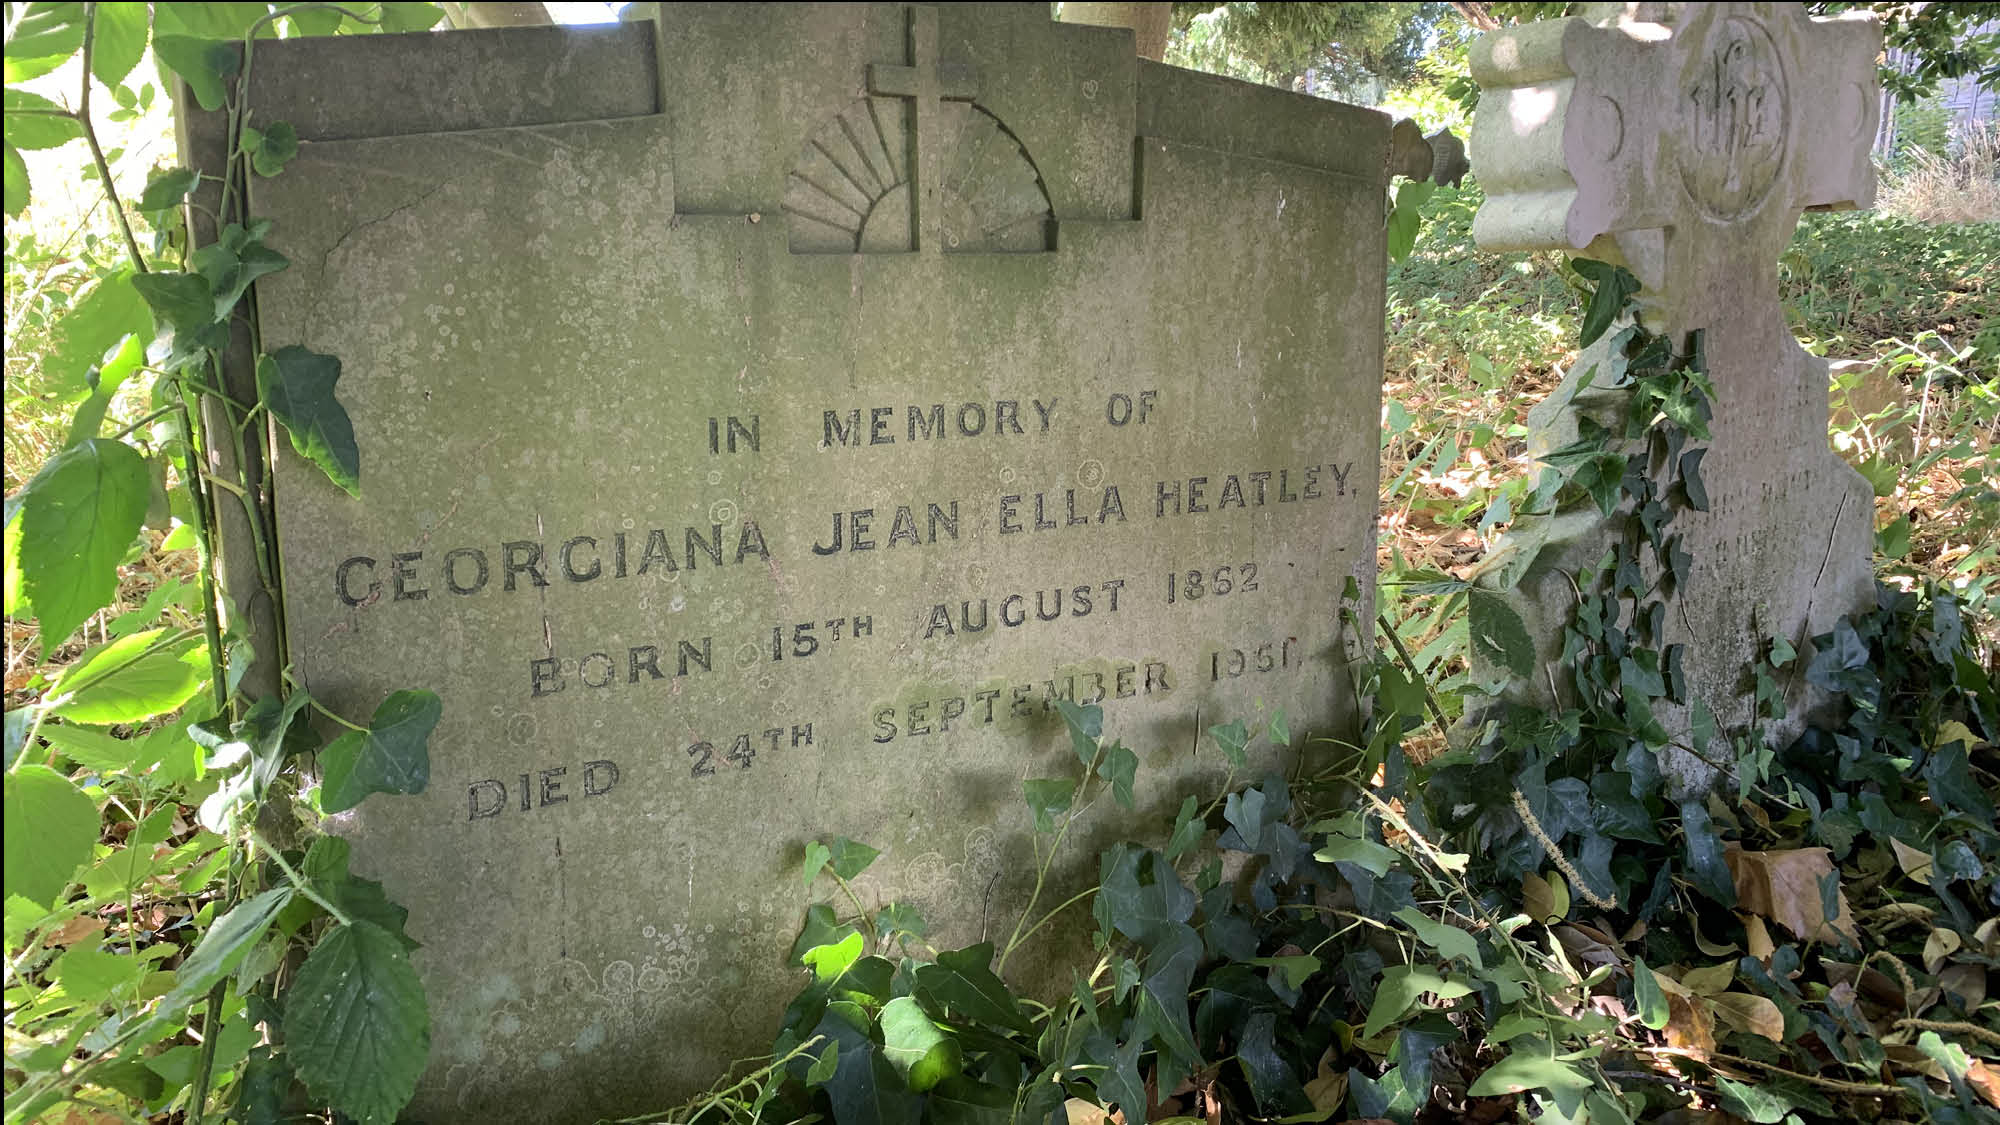 Gravestone with inscription 'in memory of Georgiana Jean Ella Heatley'